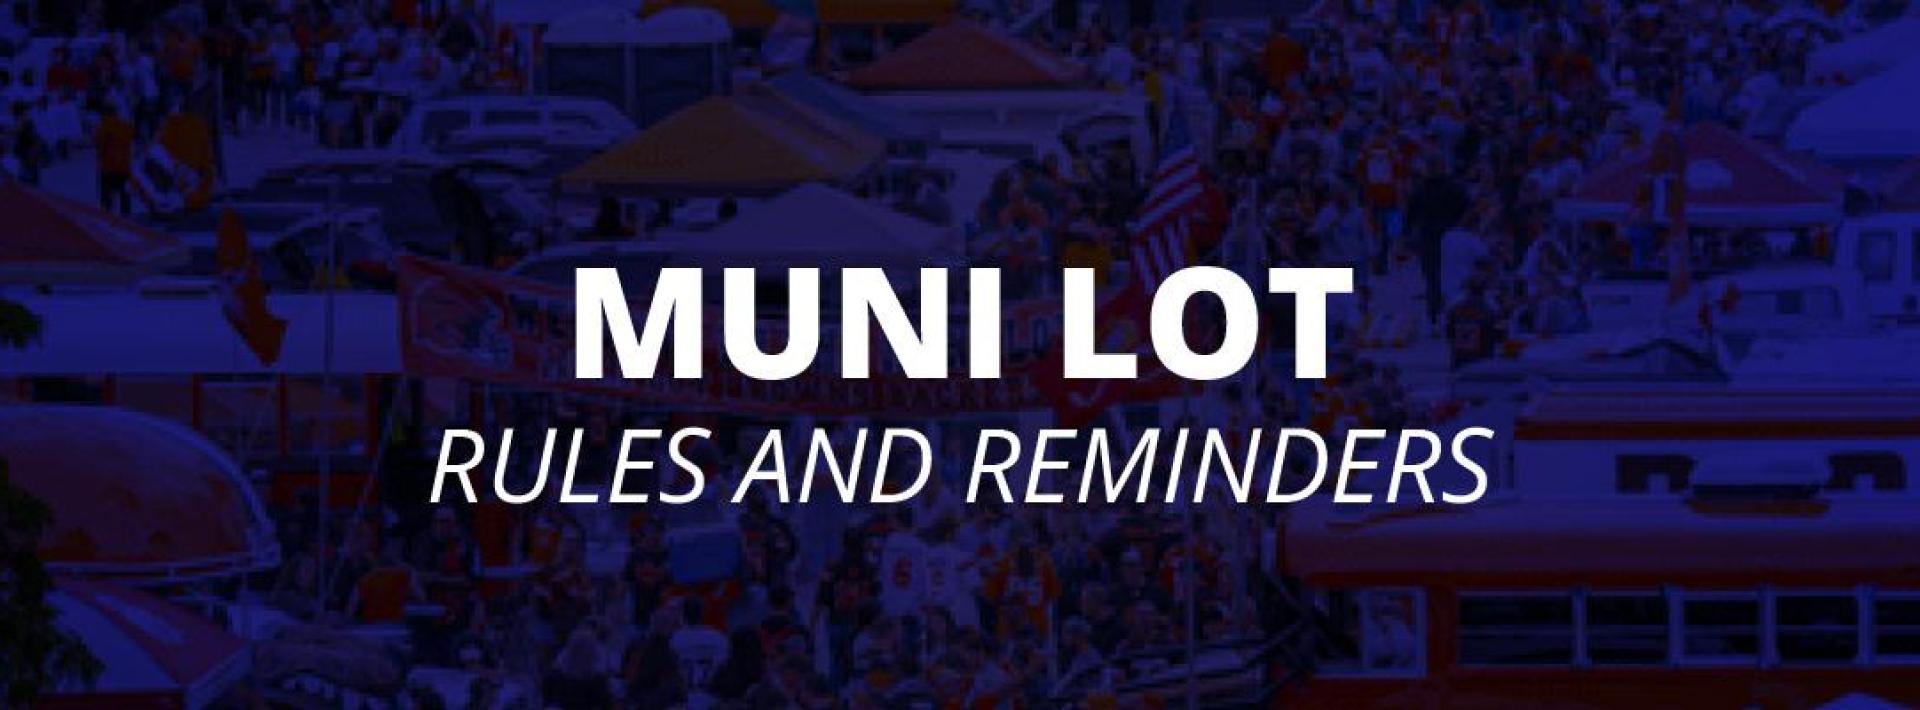 muni lot rules banner